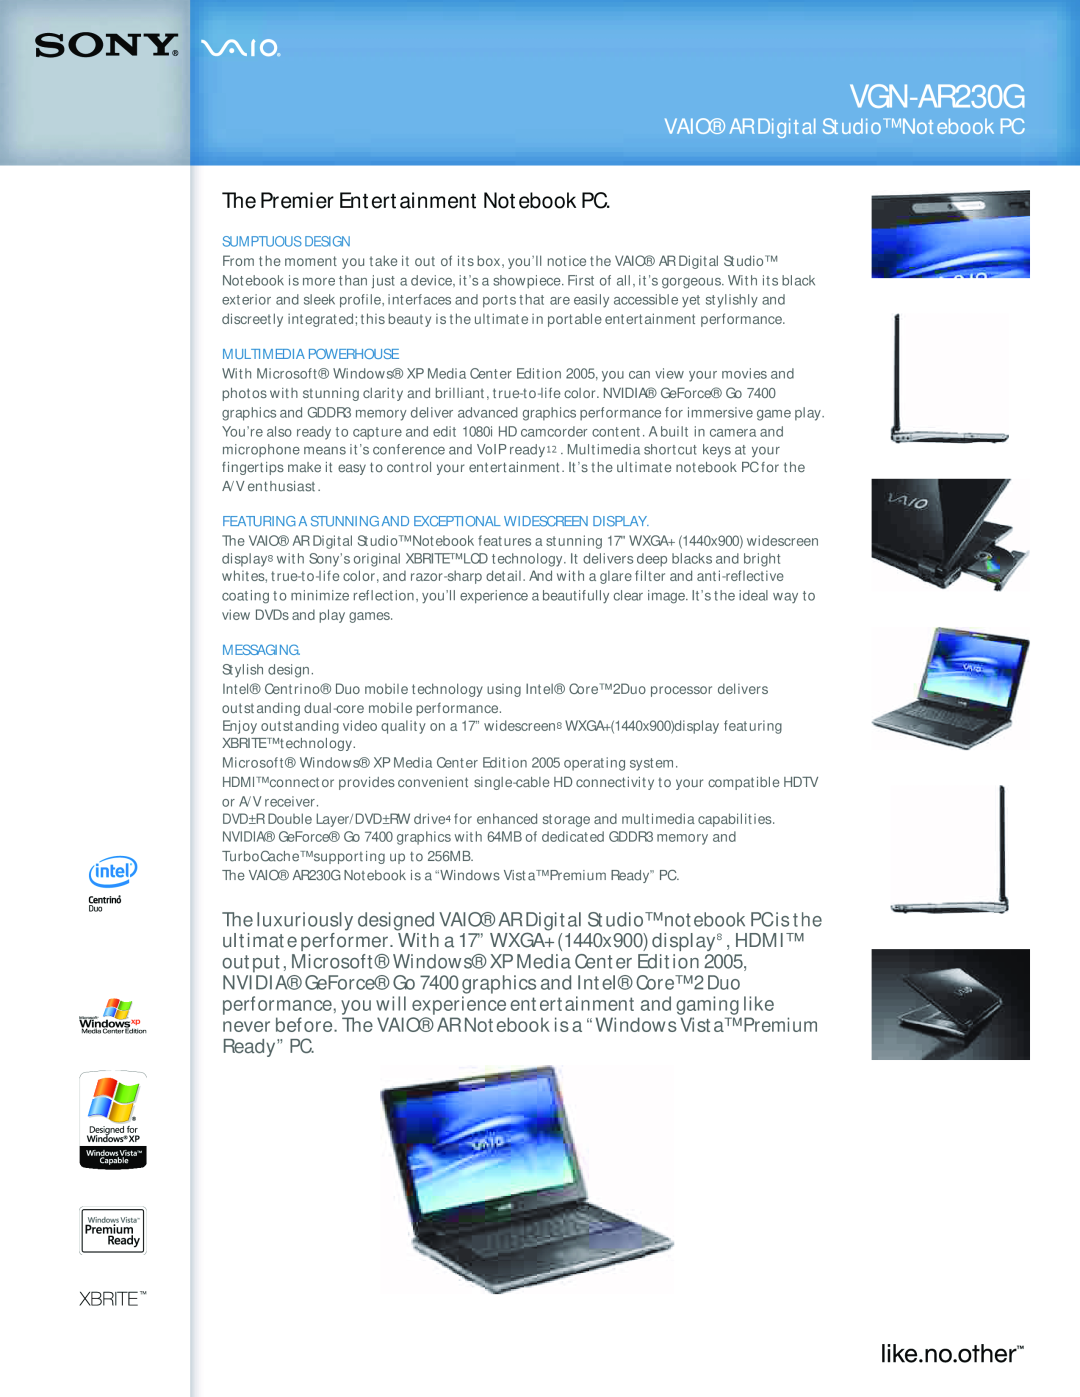 Sony VGN-AR230G manual VAIOAR Digital Studio Notebook PC, The Premier Entertainment Notebook PC, Sumptuous Design 